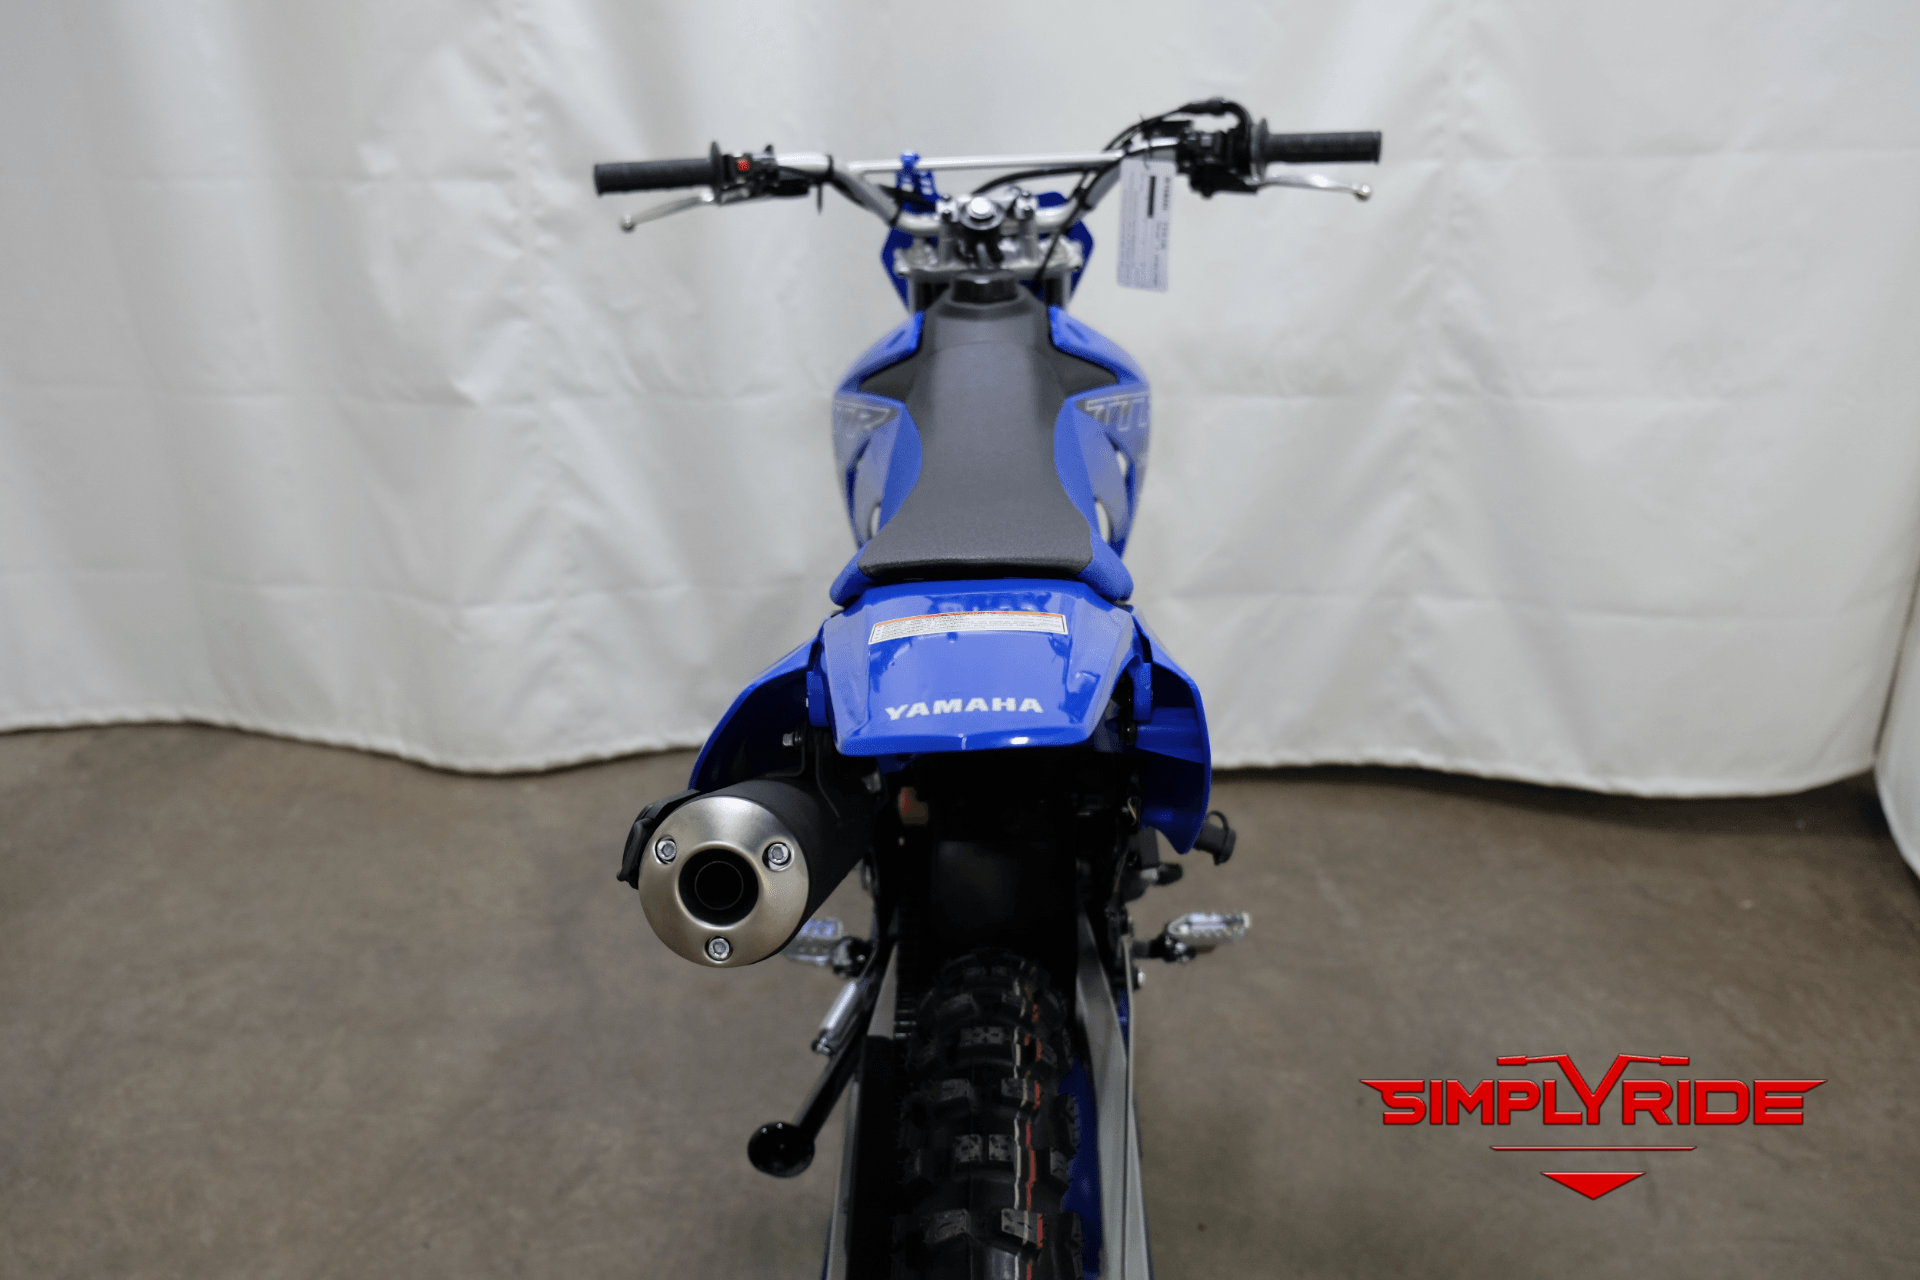 2022 Yamaha TT-R125LE in Eden Prairie, Minnesota - Photo 16